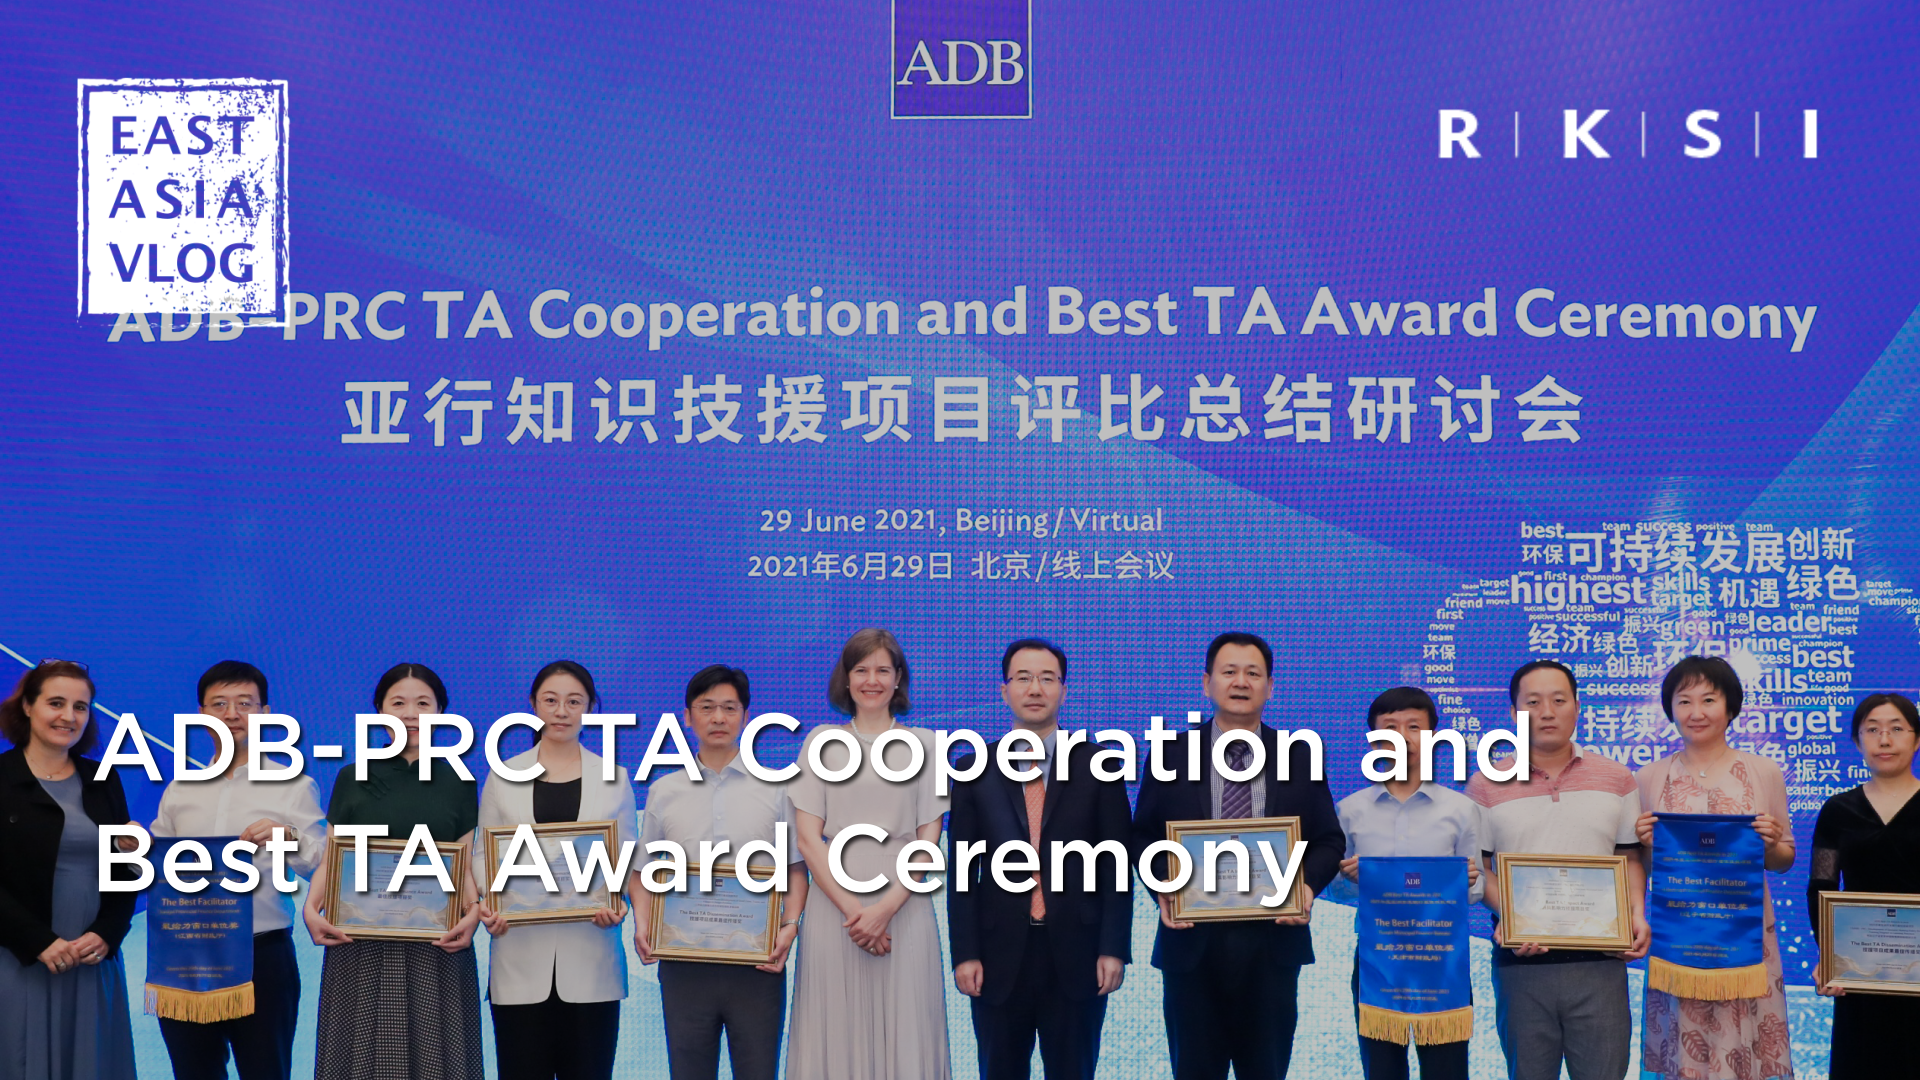 ADB-PRC TA Cooperation and Best TA Award Ceremony